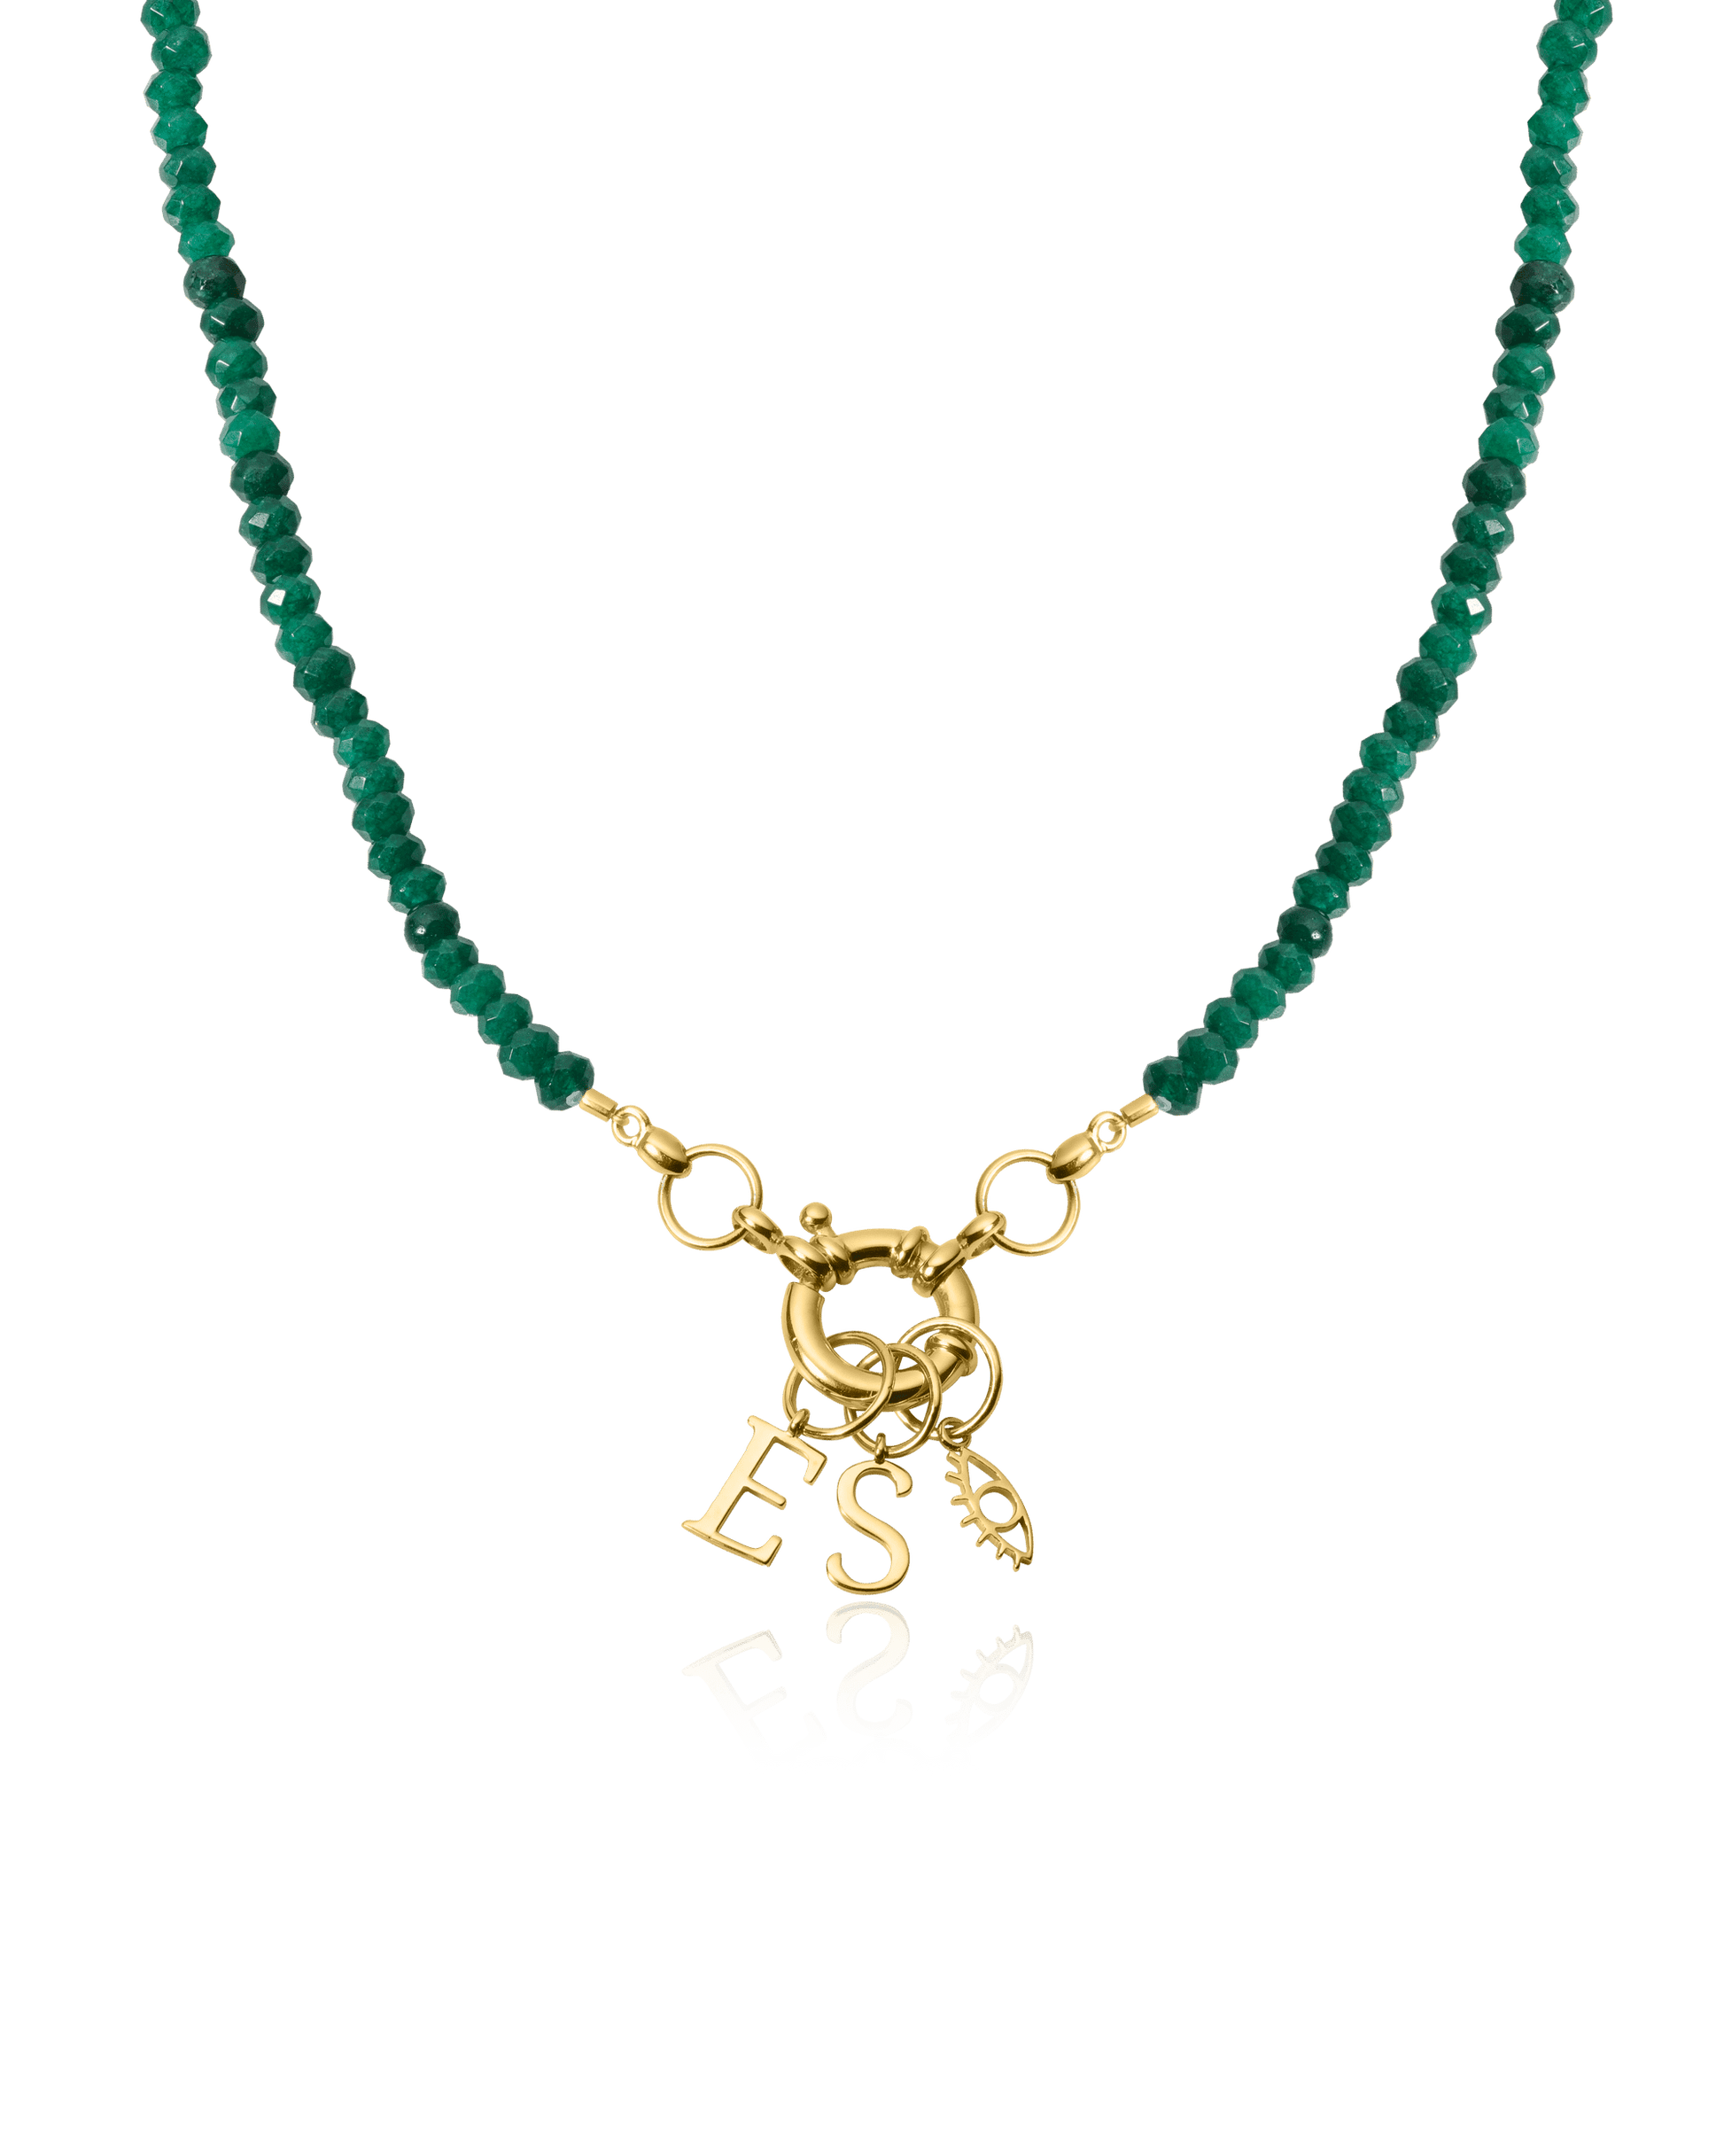 Watermelon Charm Lock Necklace - 18K Gold Vermeil Necklaces magal-dev Green Jade Gemstones 1 Charm 16"